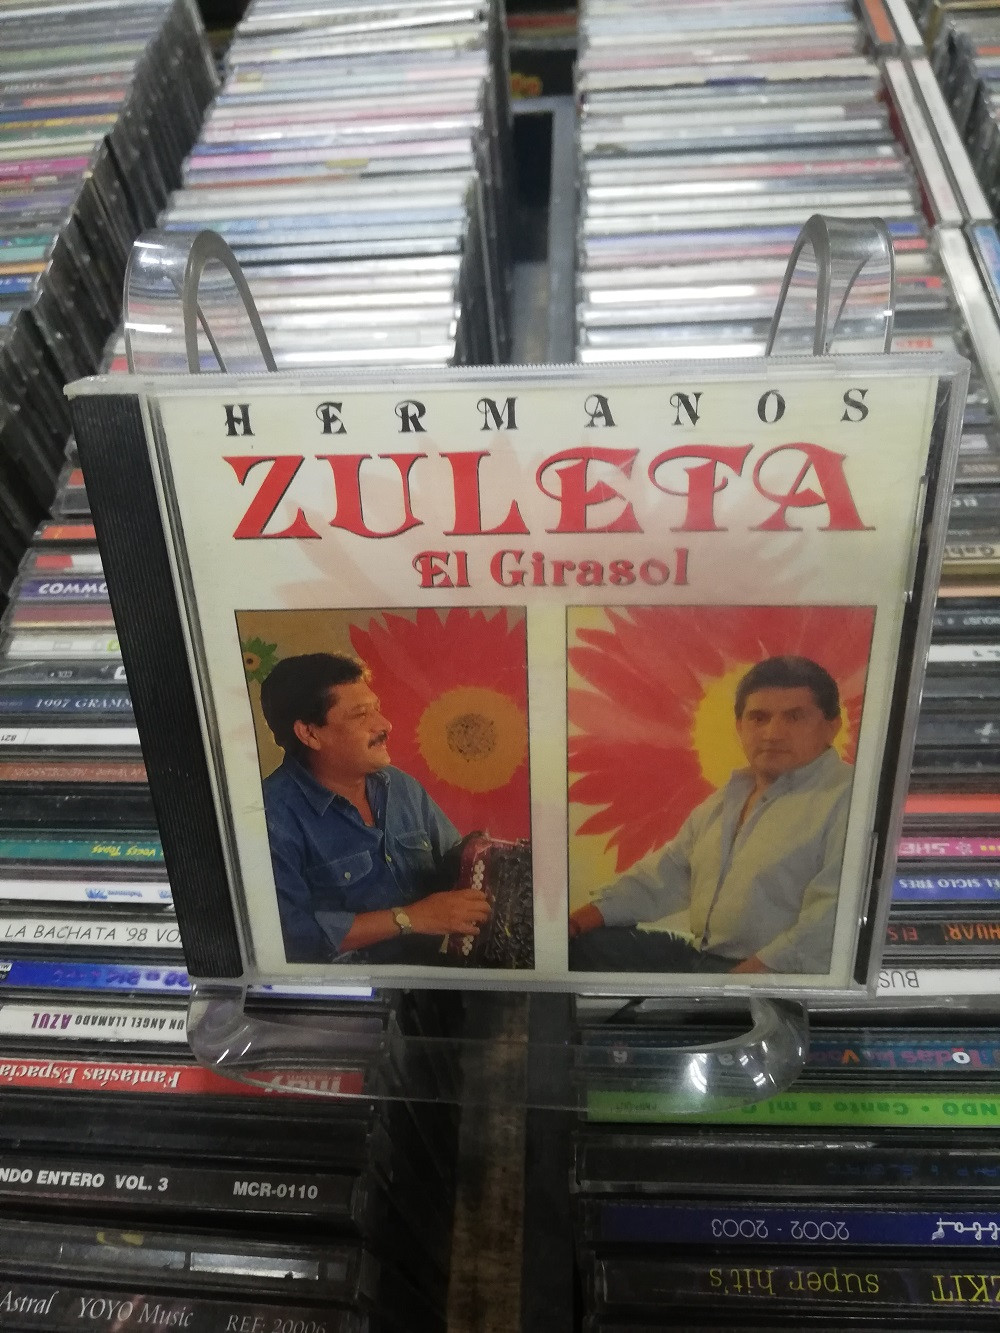 Imagen CD HERMANOS ZULETA - EL GIRASOL